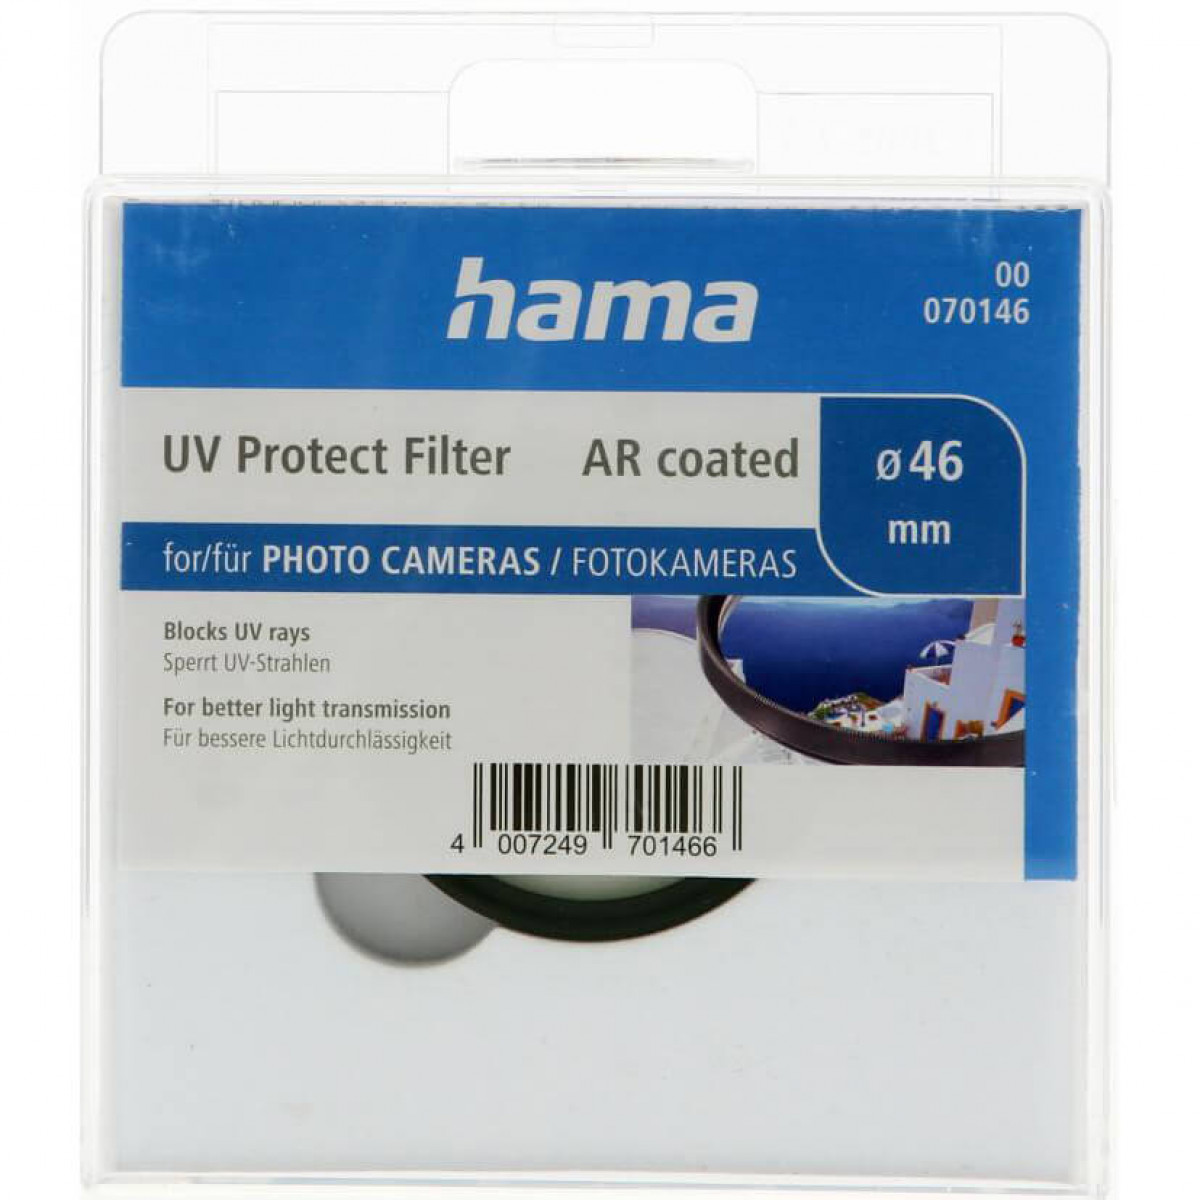 46 HAMA mm mm UV-Filter coated, AR 46,0